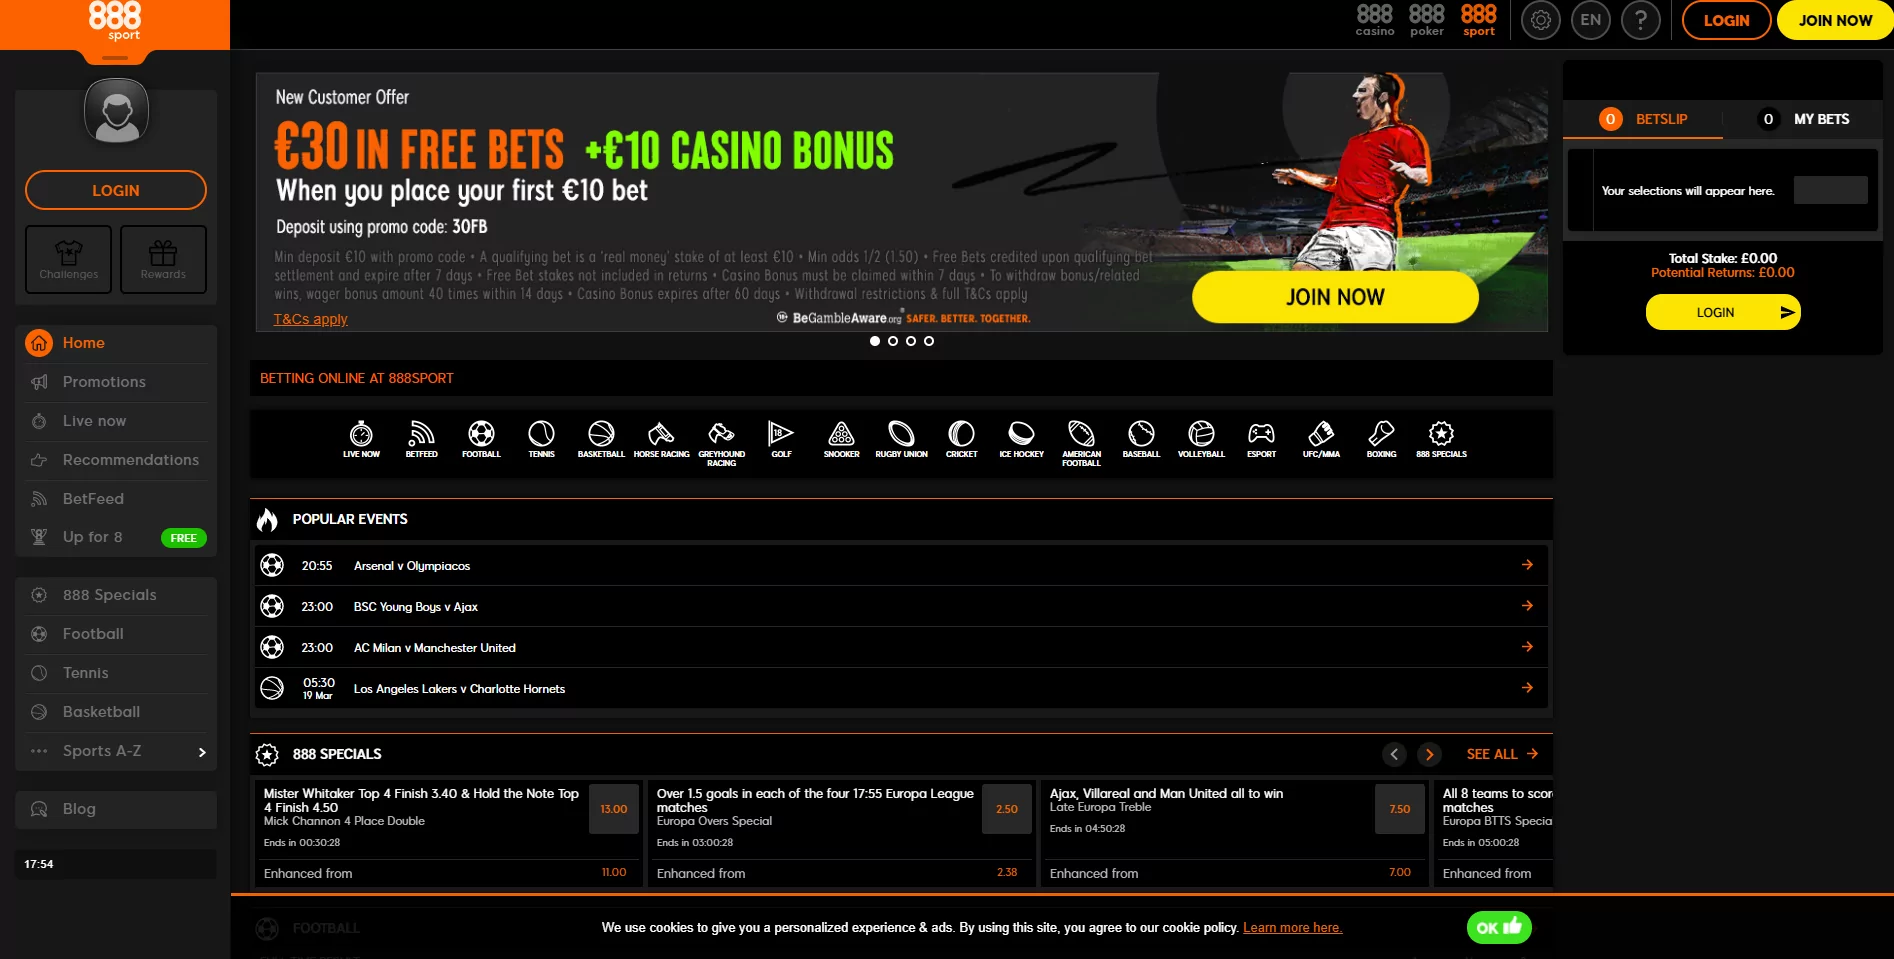 888sport homepage screenshot